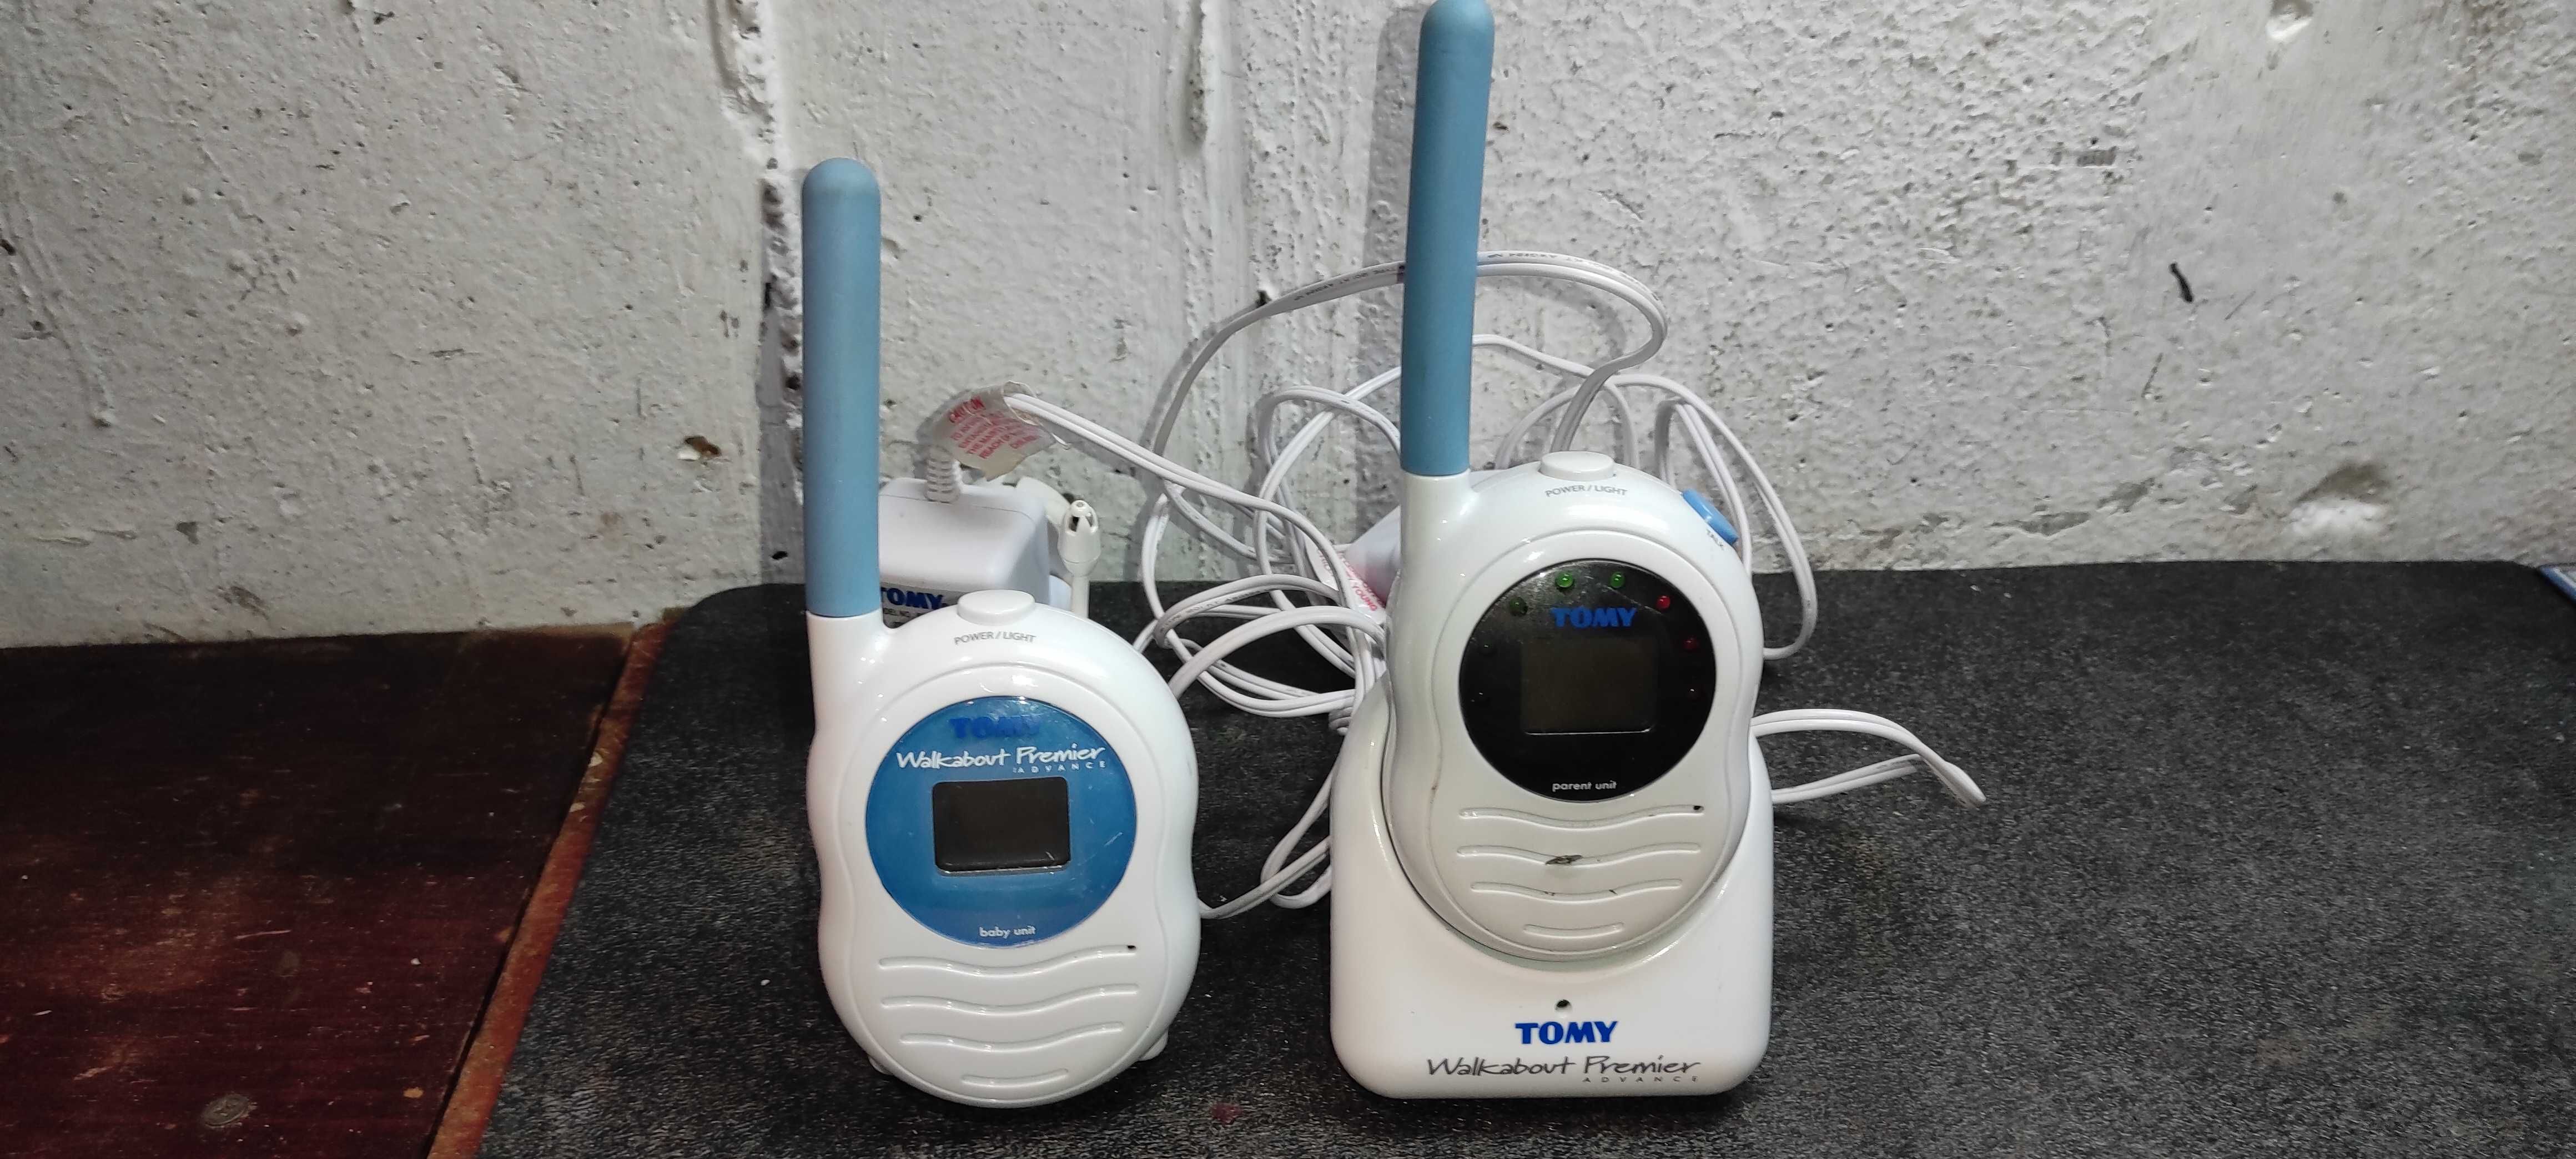 Interfon baby monitor wireless 2 modele